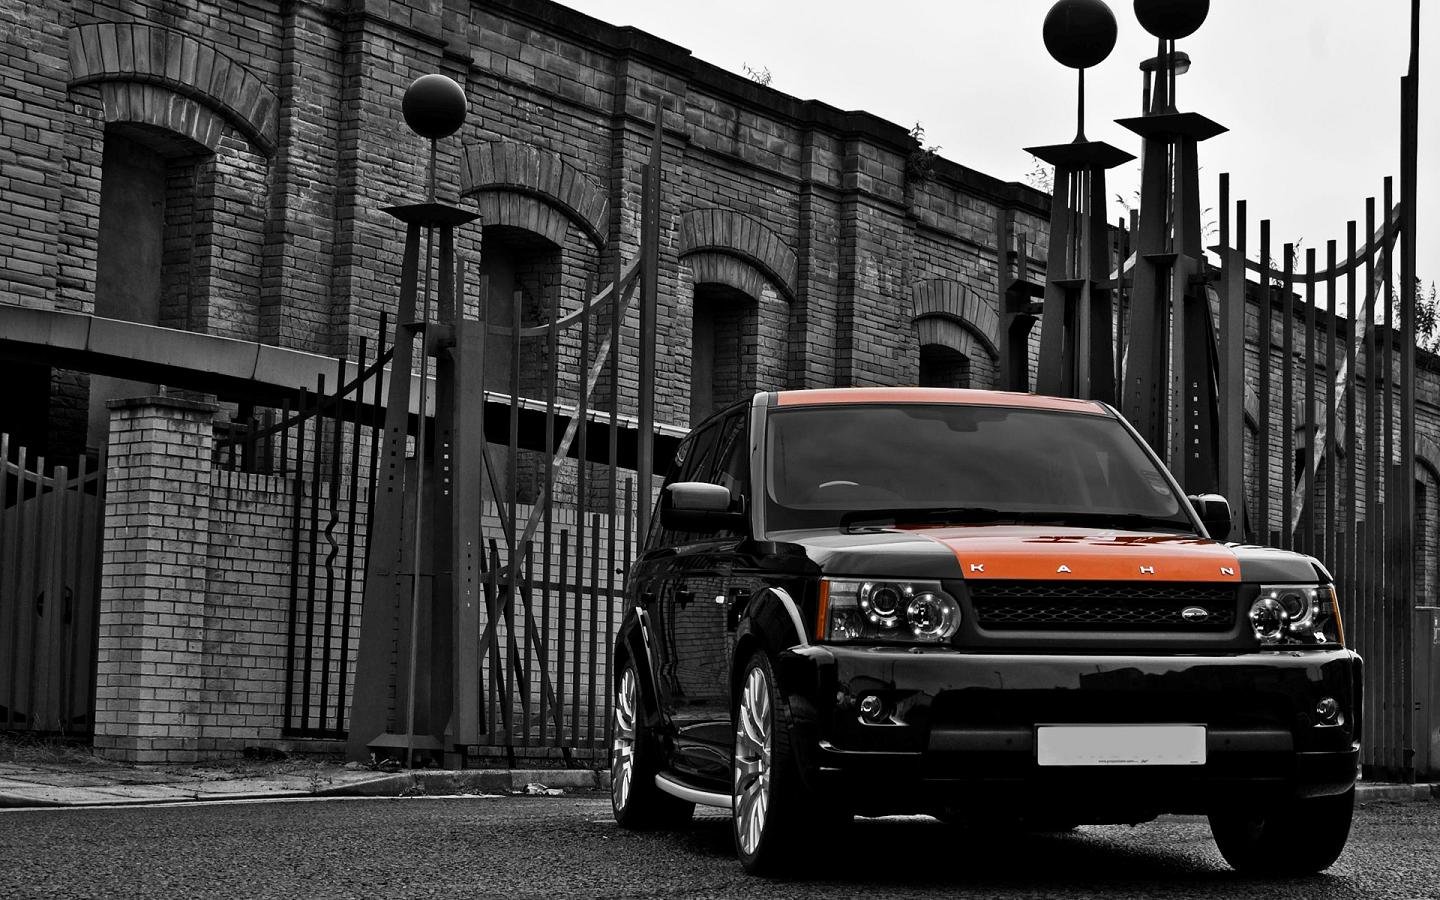 Range Rover wallpapers HD for desktop backgrounds